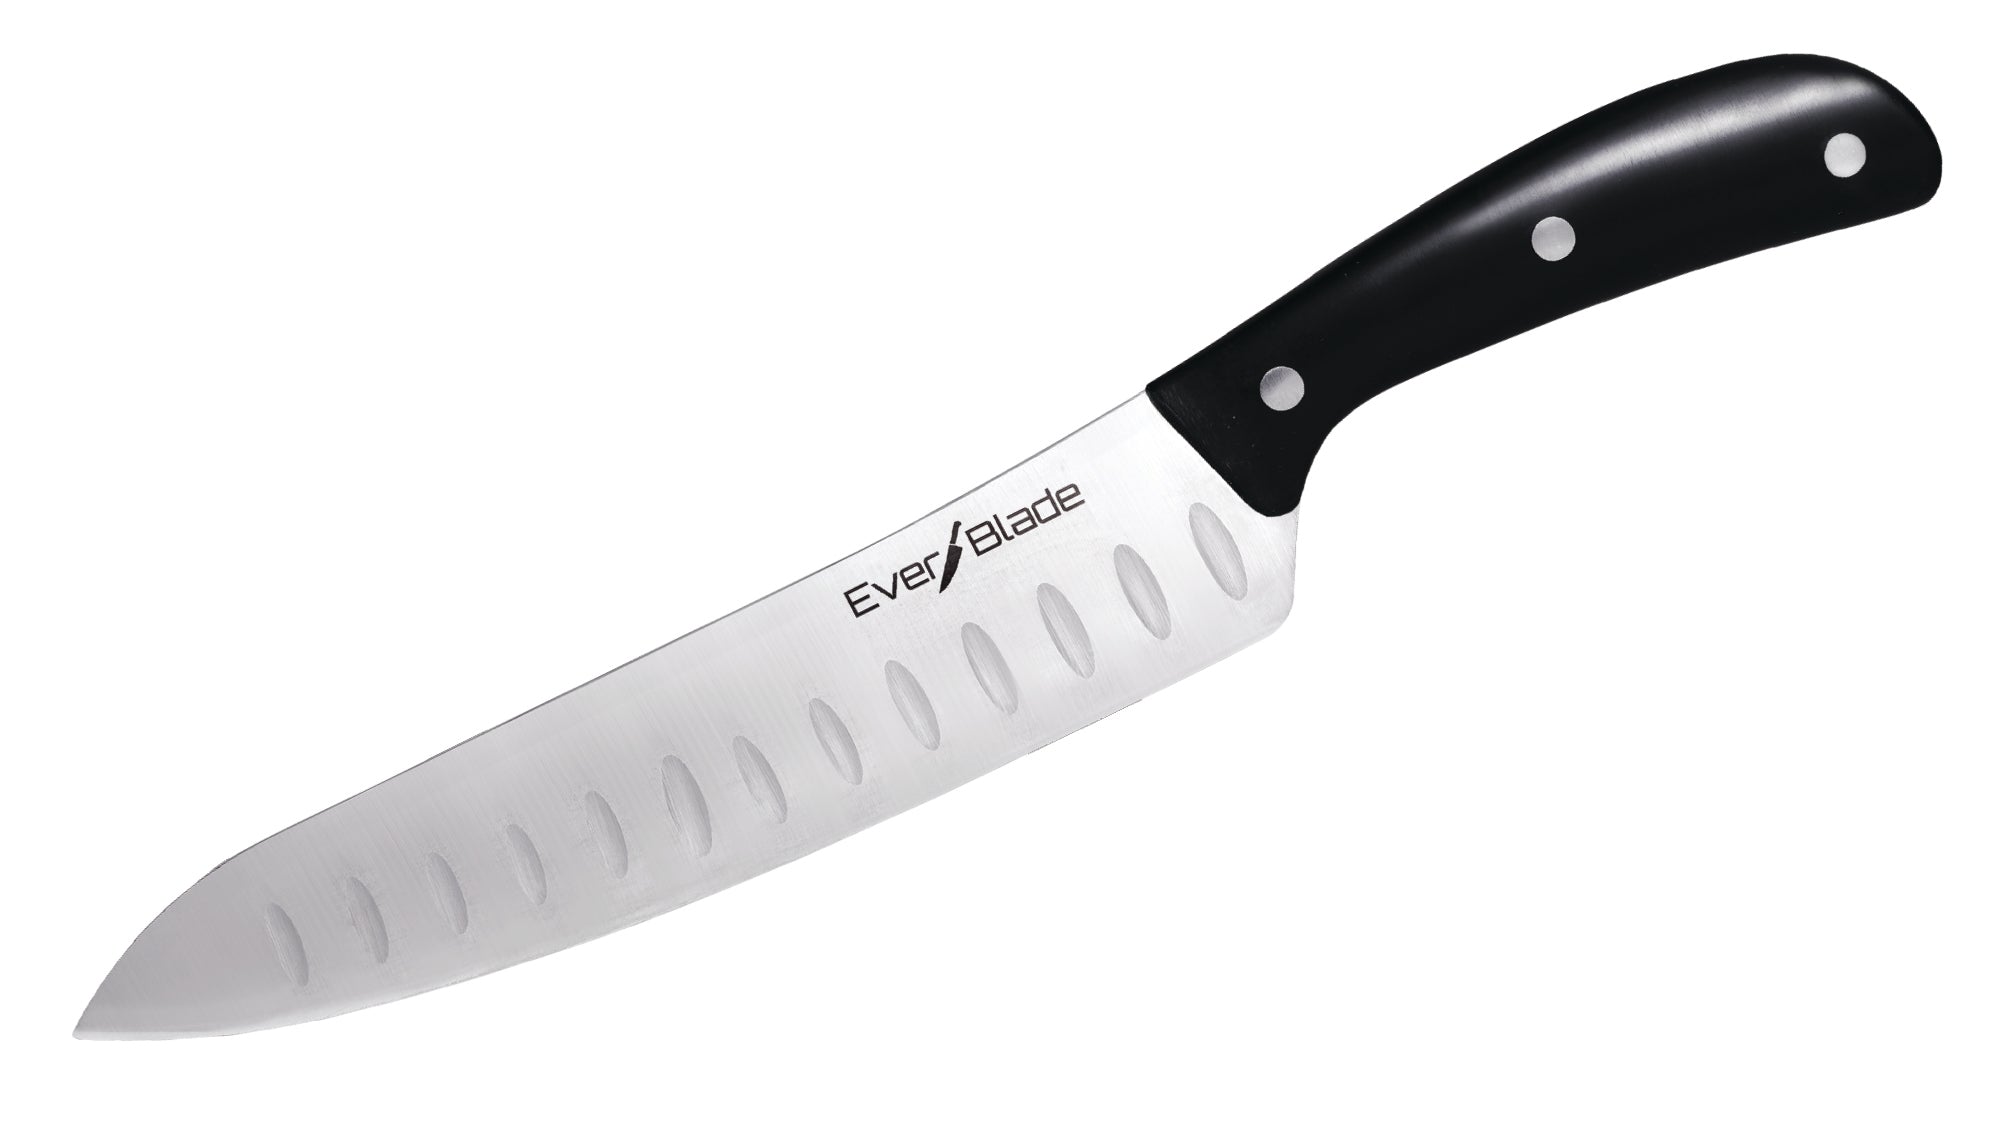 EVERRICH® Professional Kitchen Knives Chef Knife 8 Main Kitchen